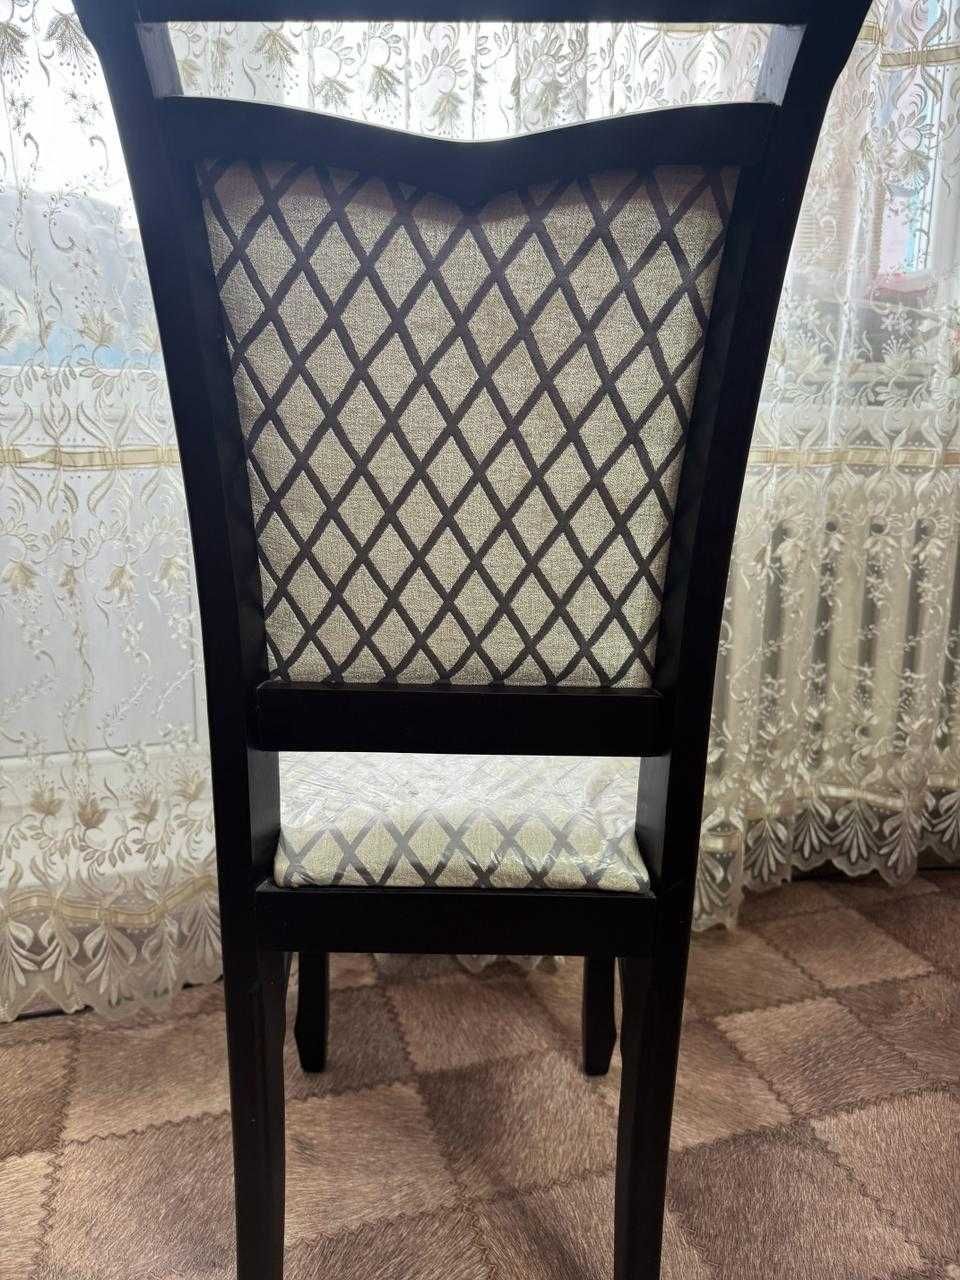 Стол со стульями